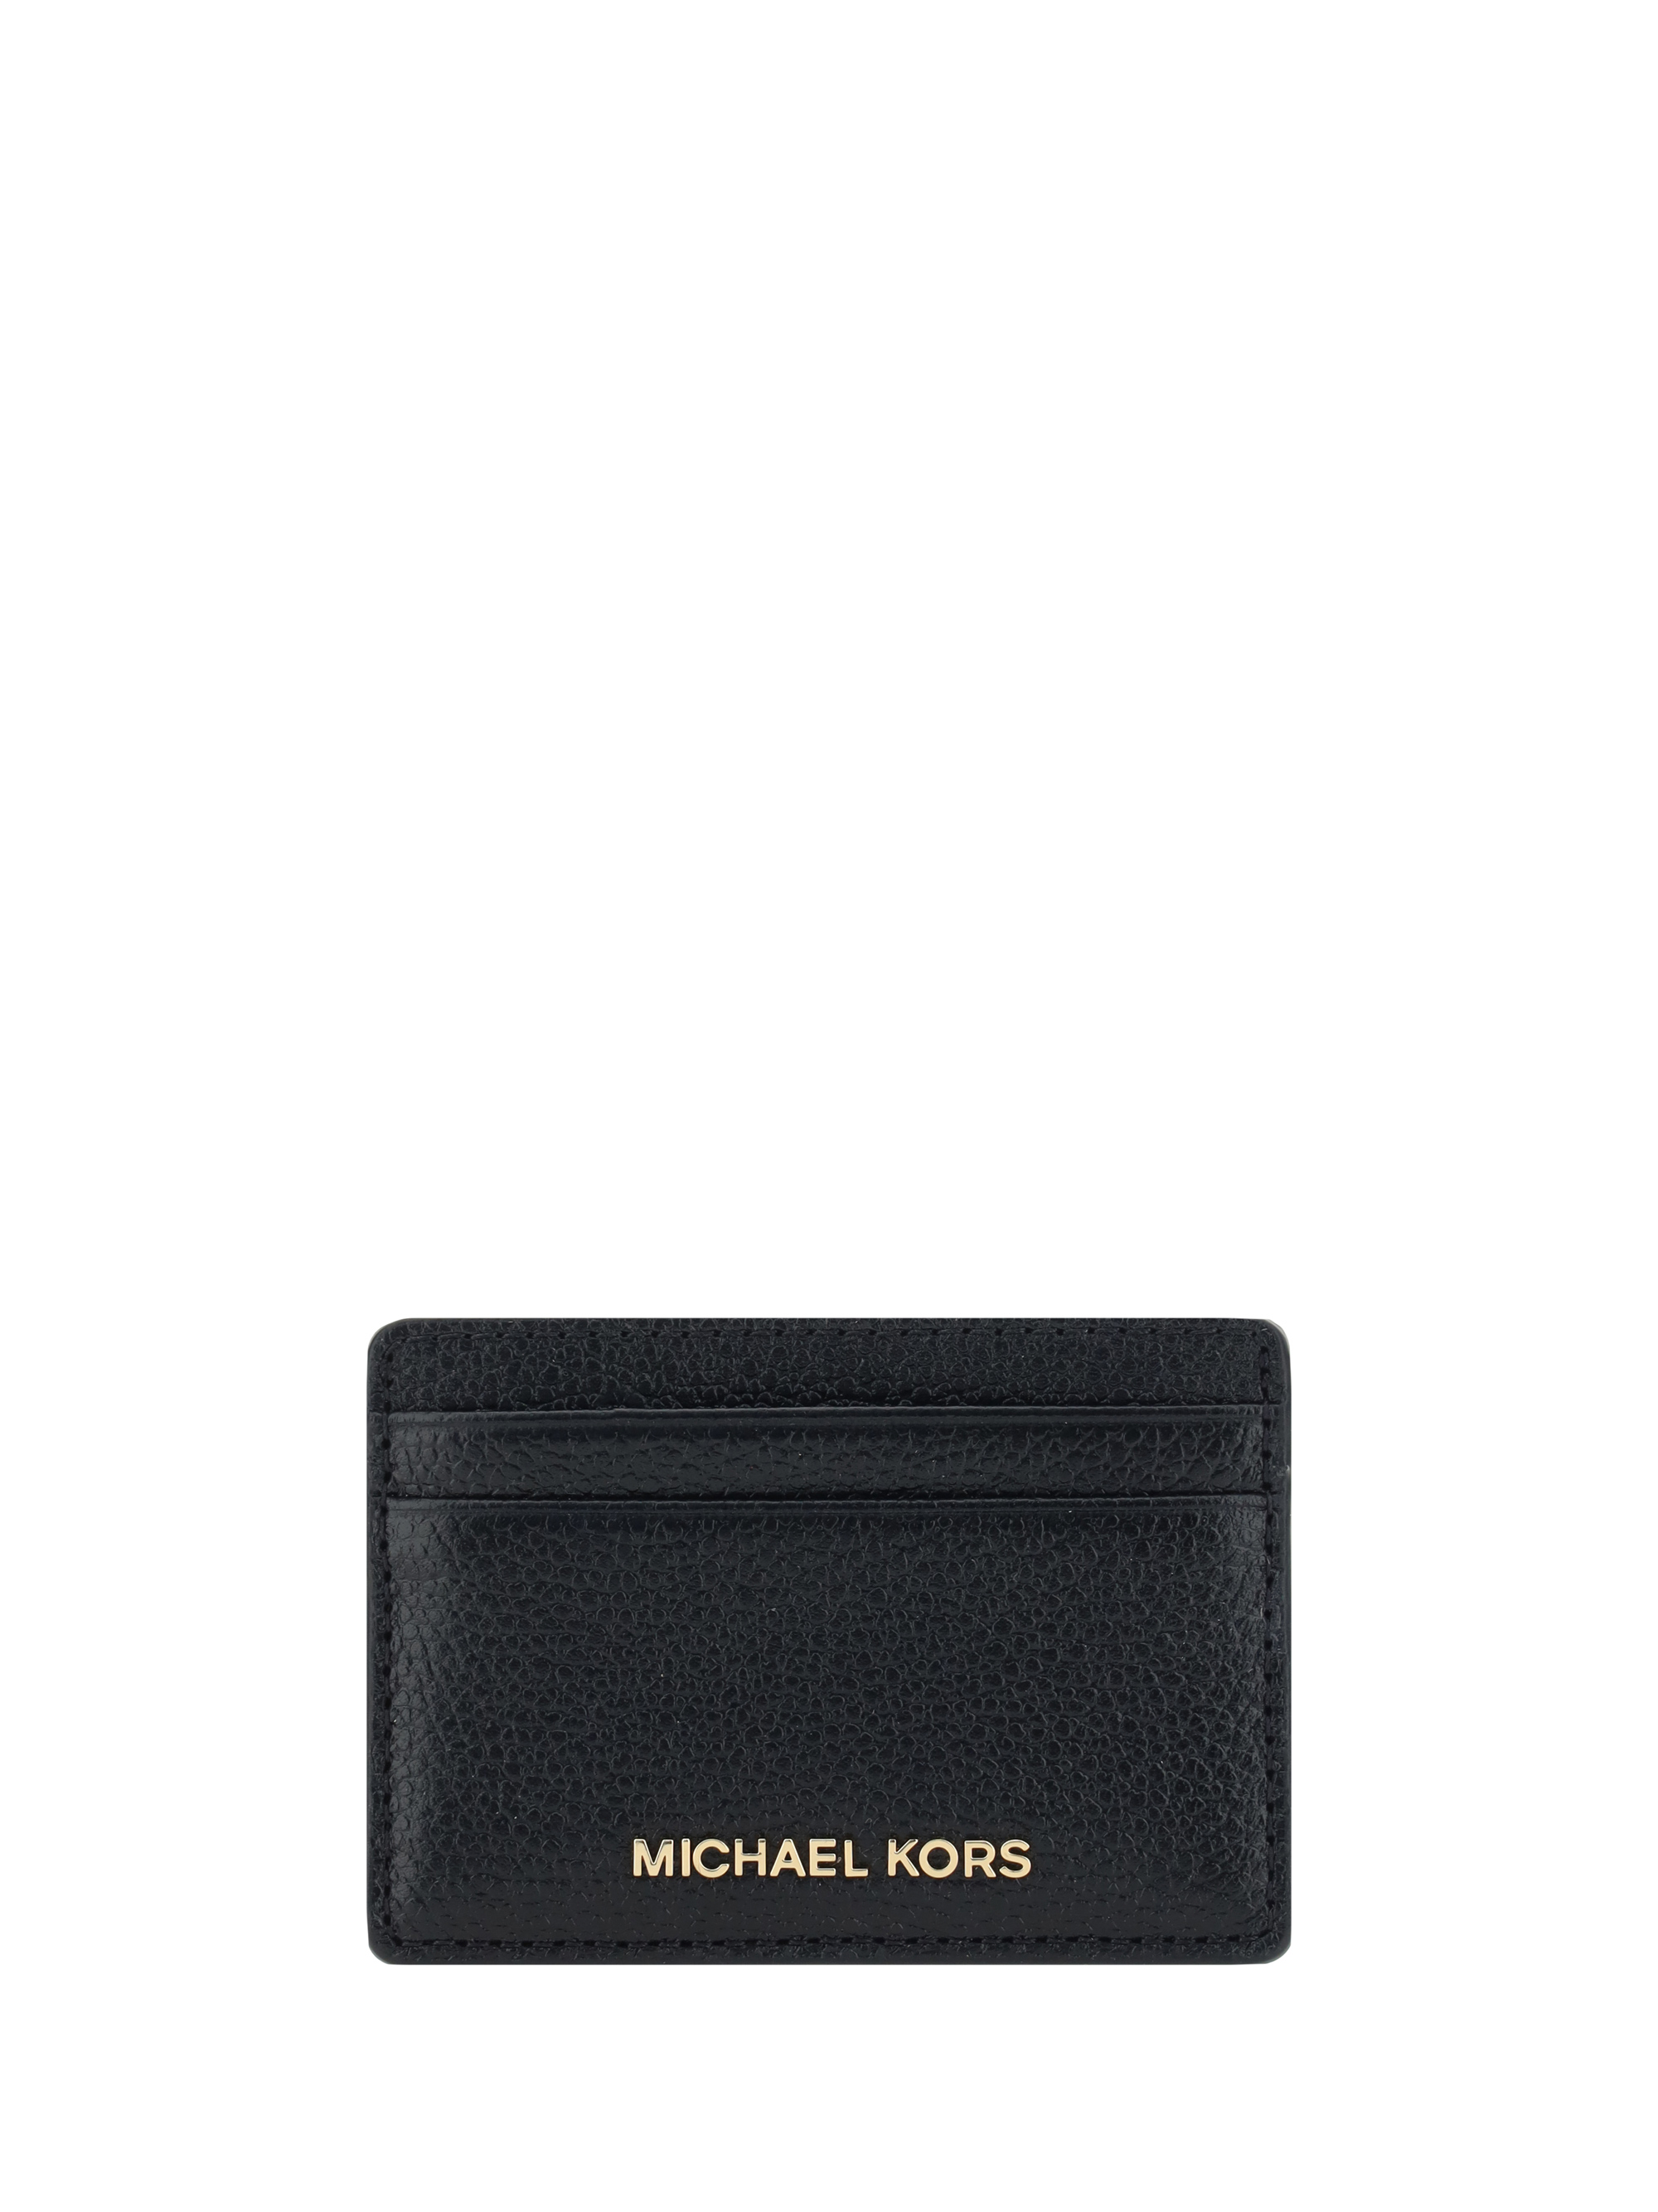 michael kors - jet set card holder